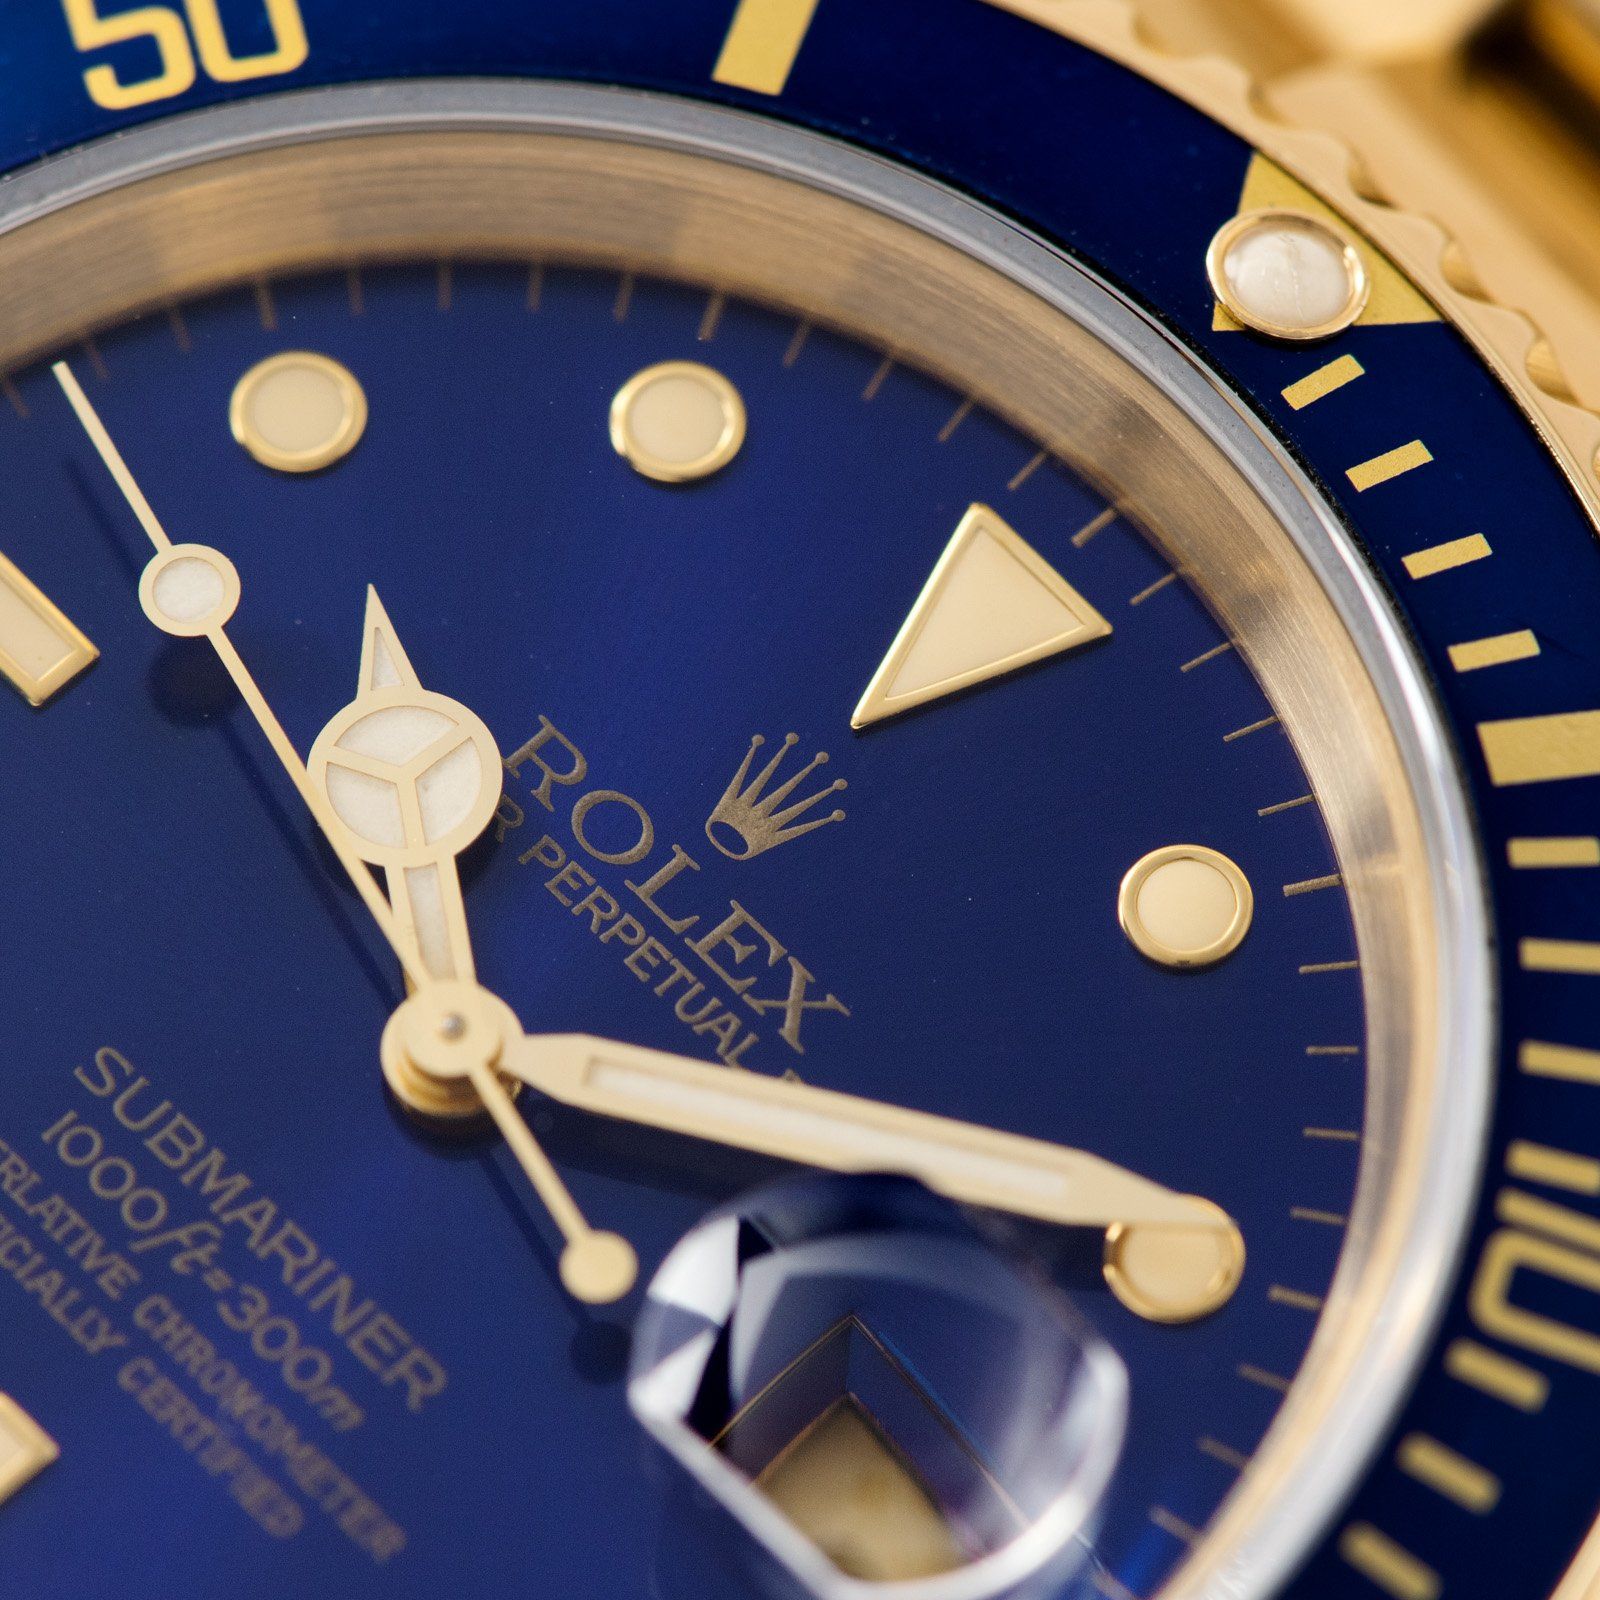 16618 Rolex Submariner Blue Dial Mens 18K Gold Watch